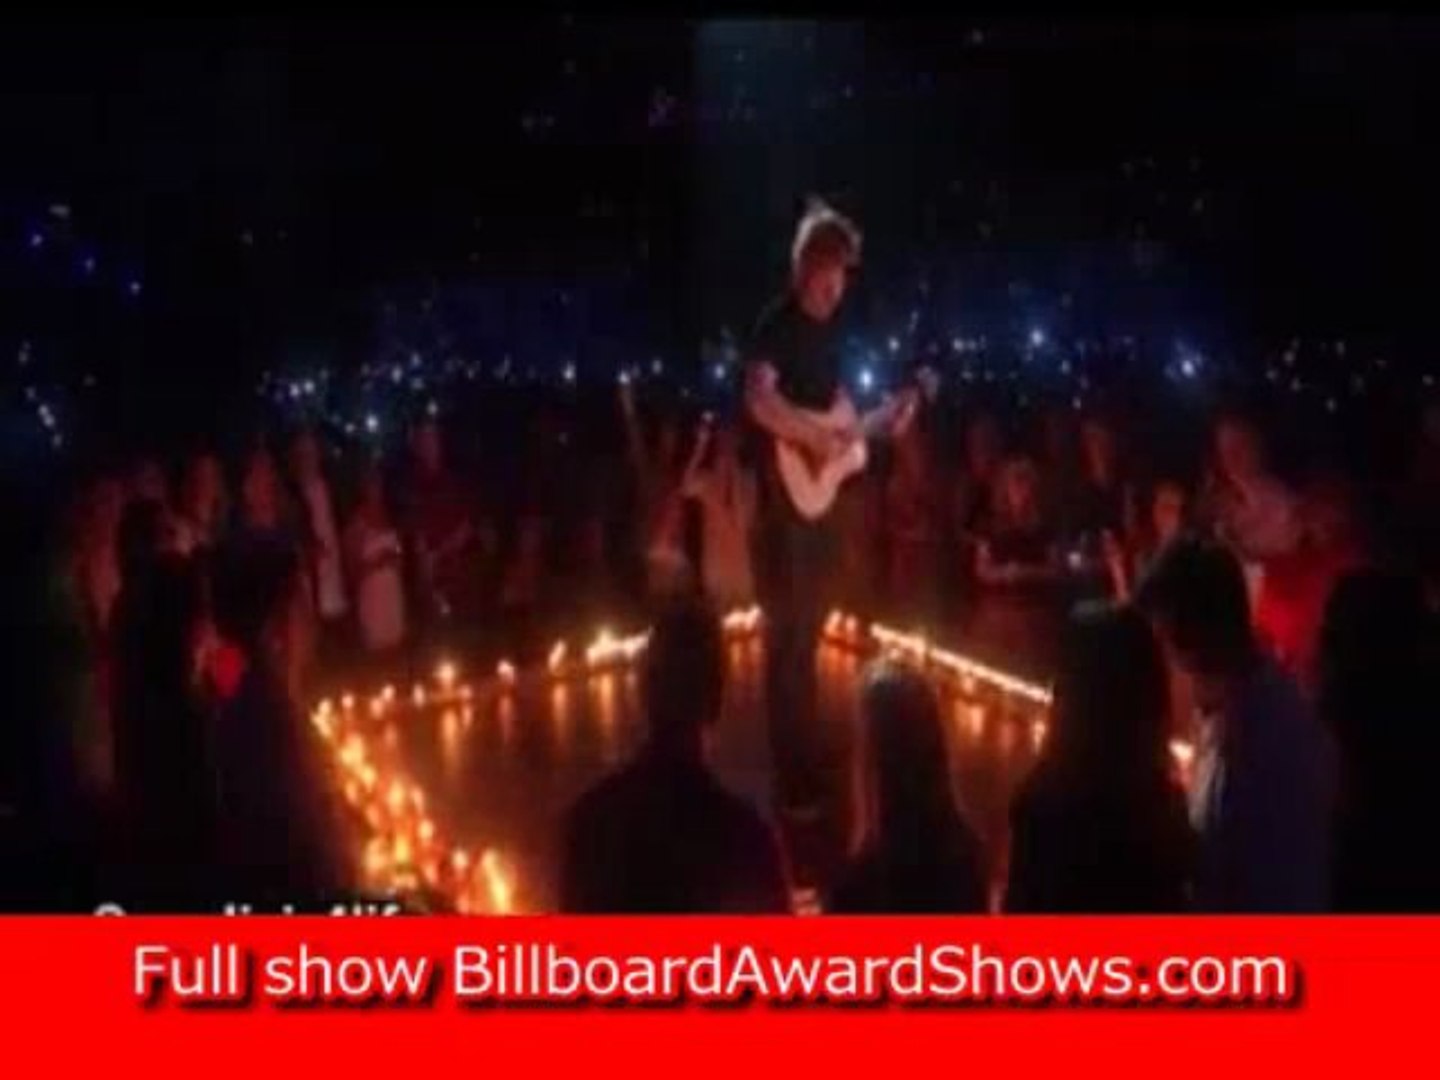 HD 720p Ed Sheeran Billboards 2013 HD performance video